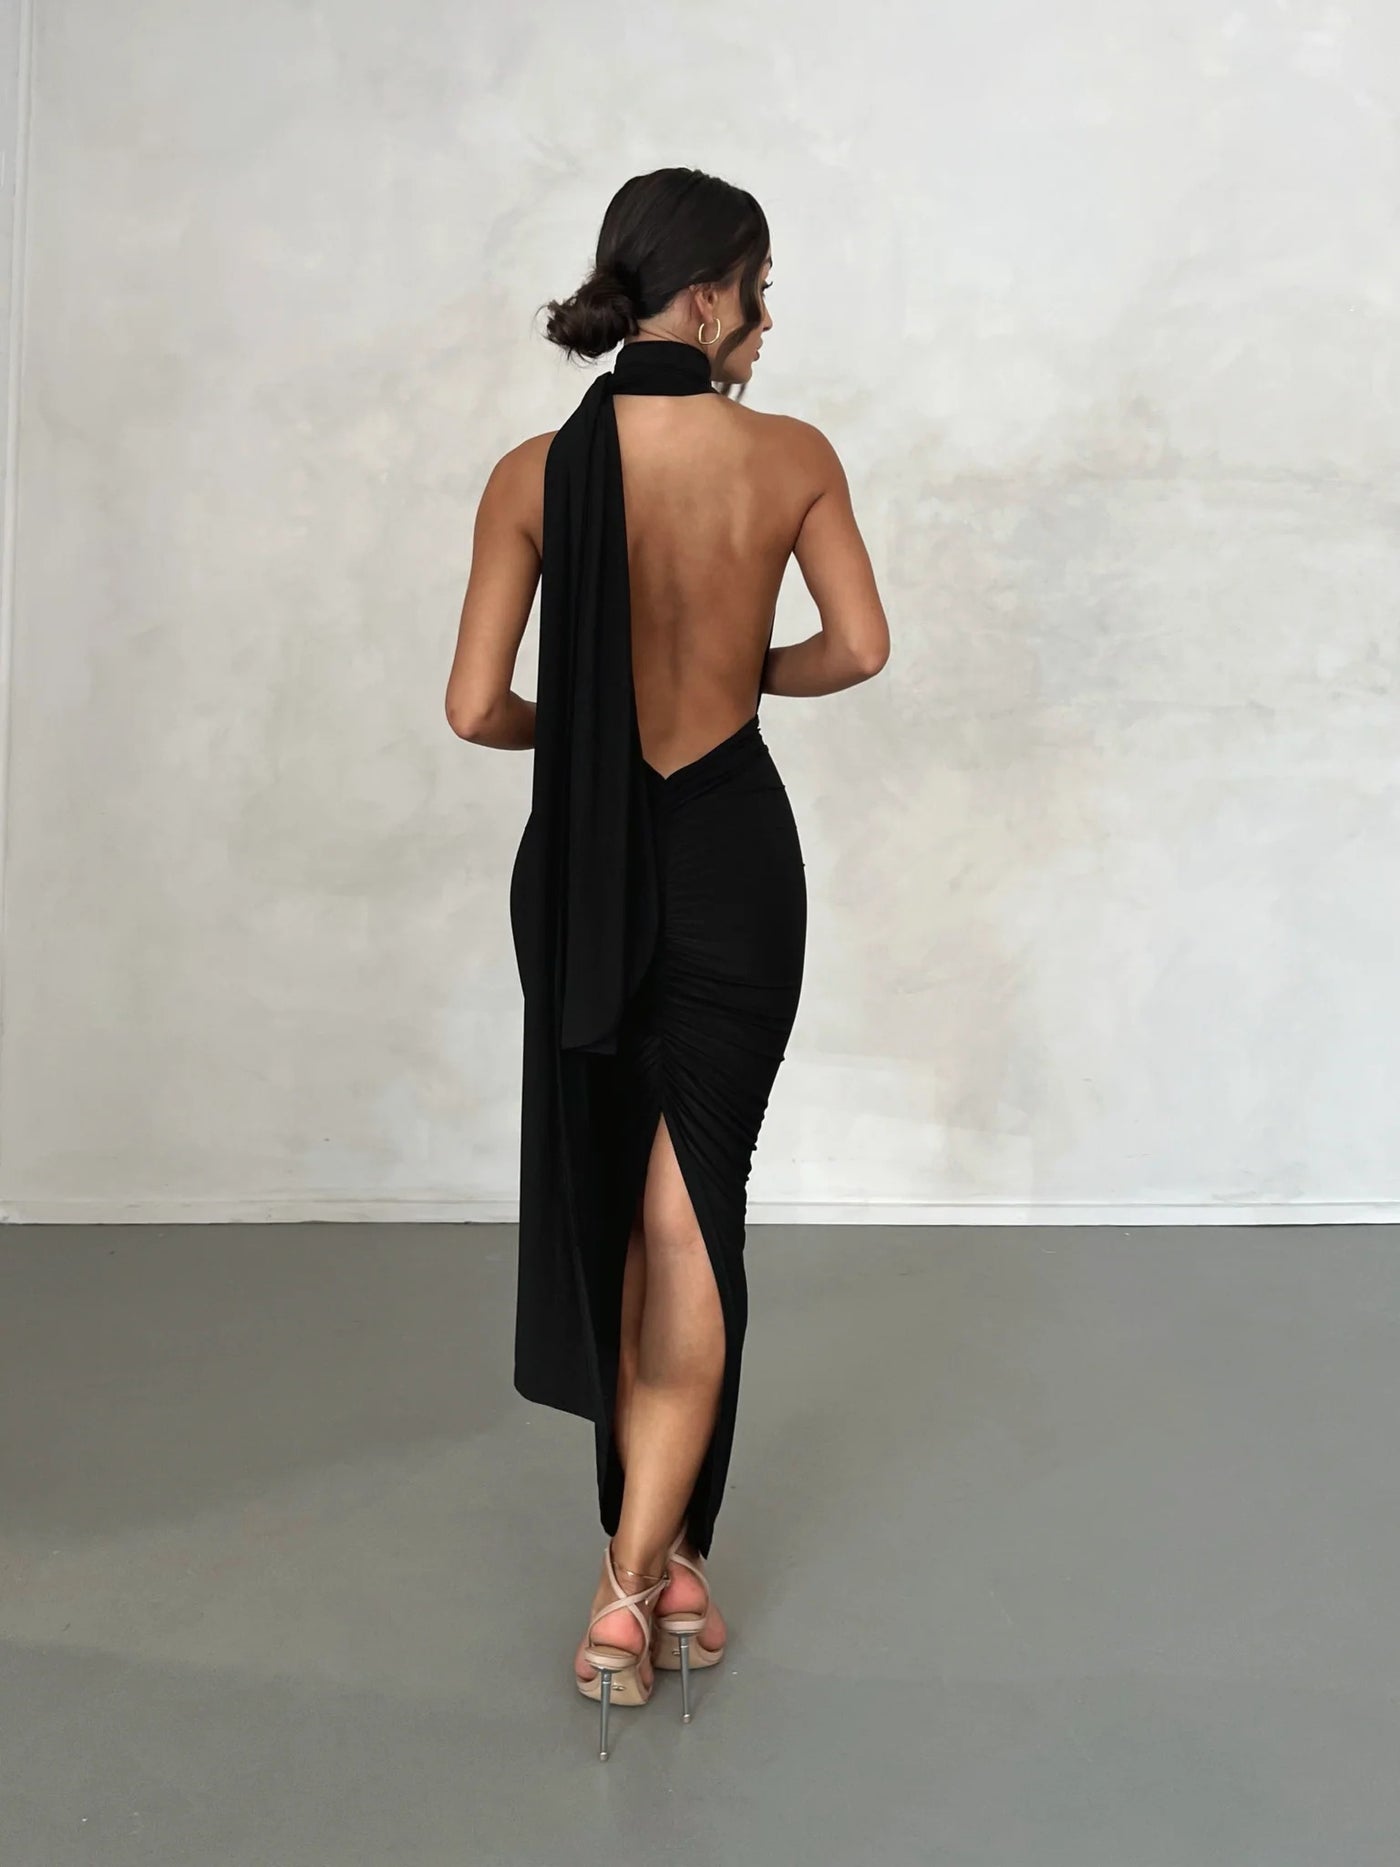 Melrose Multi-Way Dress - Black - SHOPJAUS - JAUS